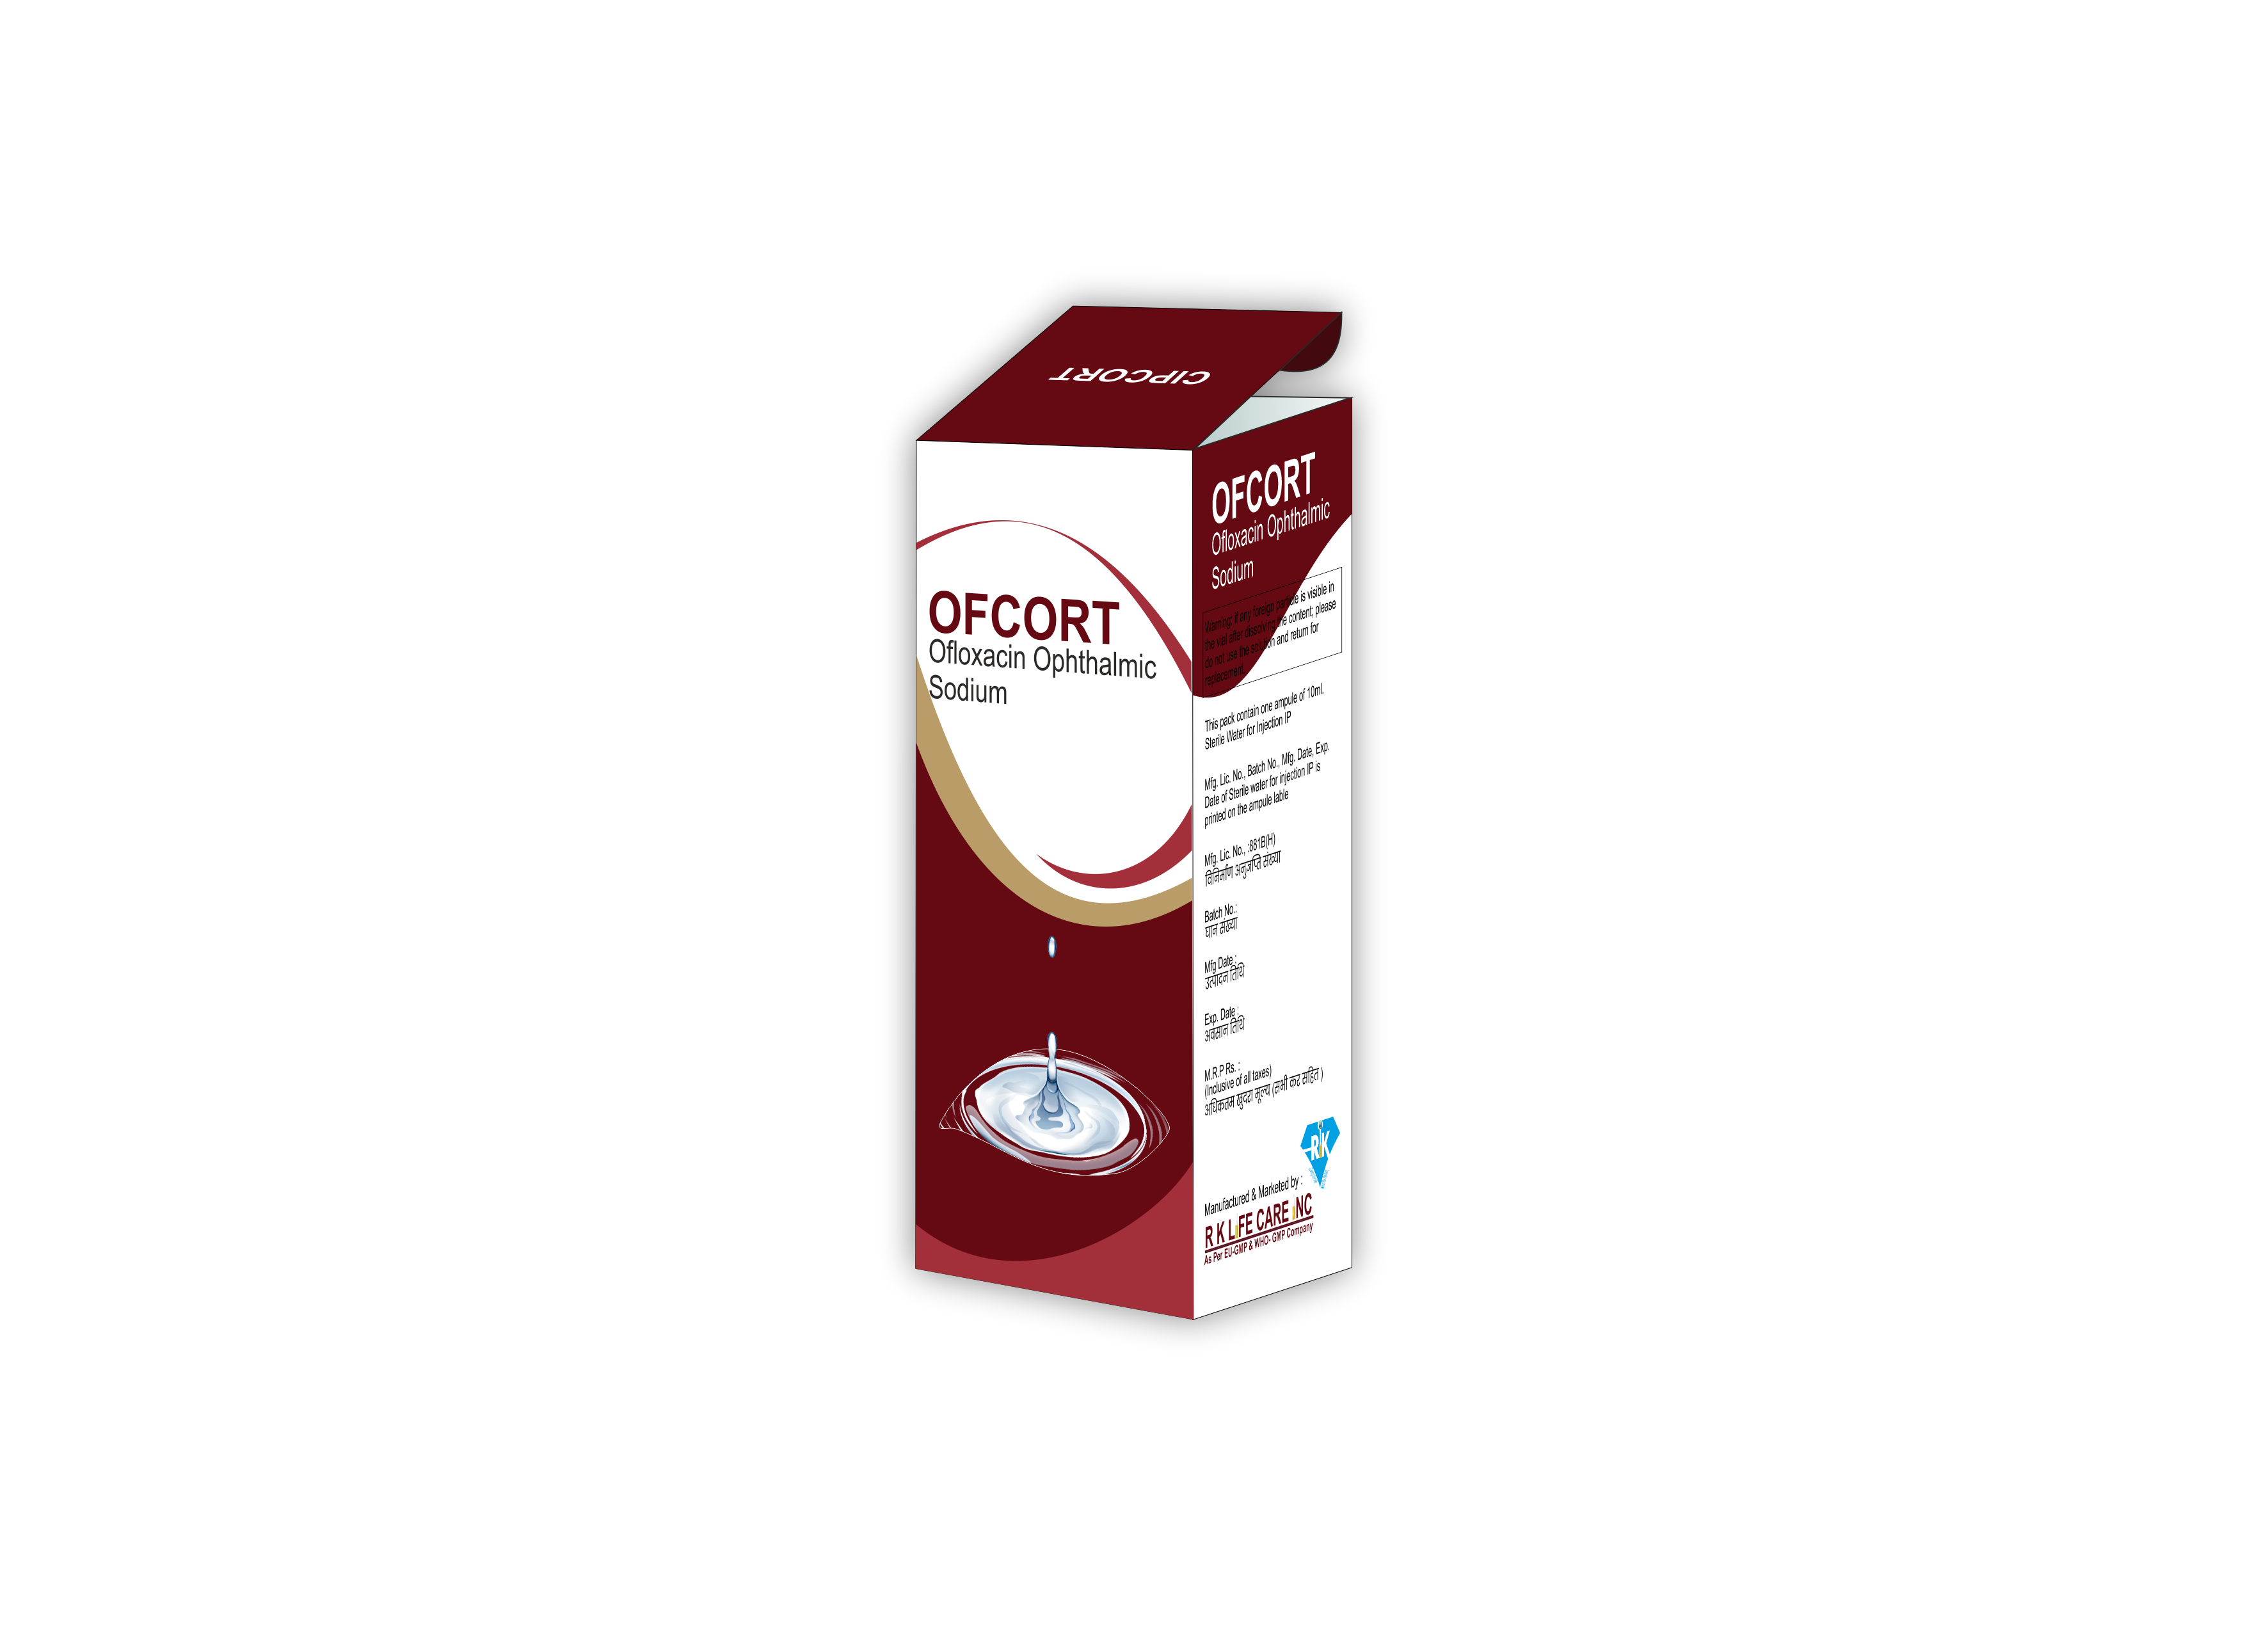 Ofloxacin Ophthalmic Sodium